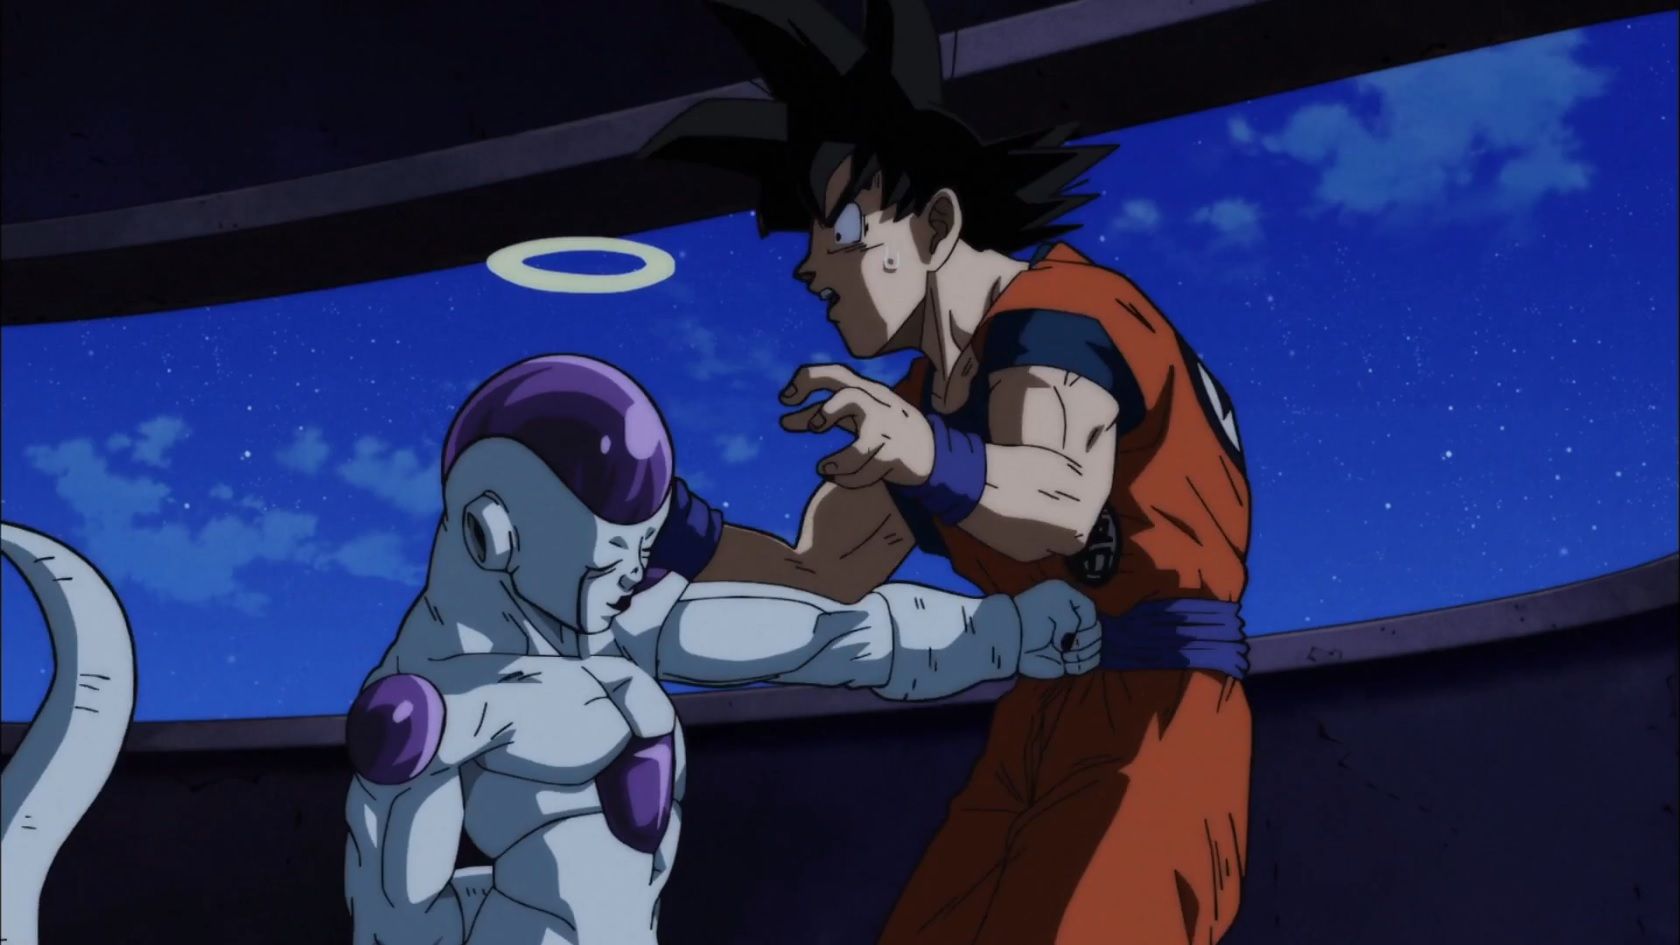 Frieza attacks Goku on Dragon Ball Super